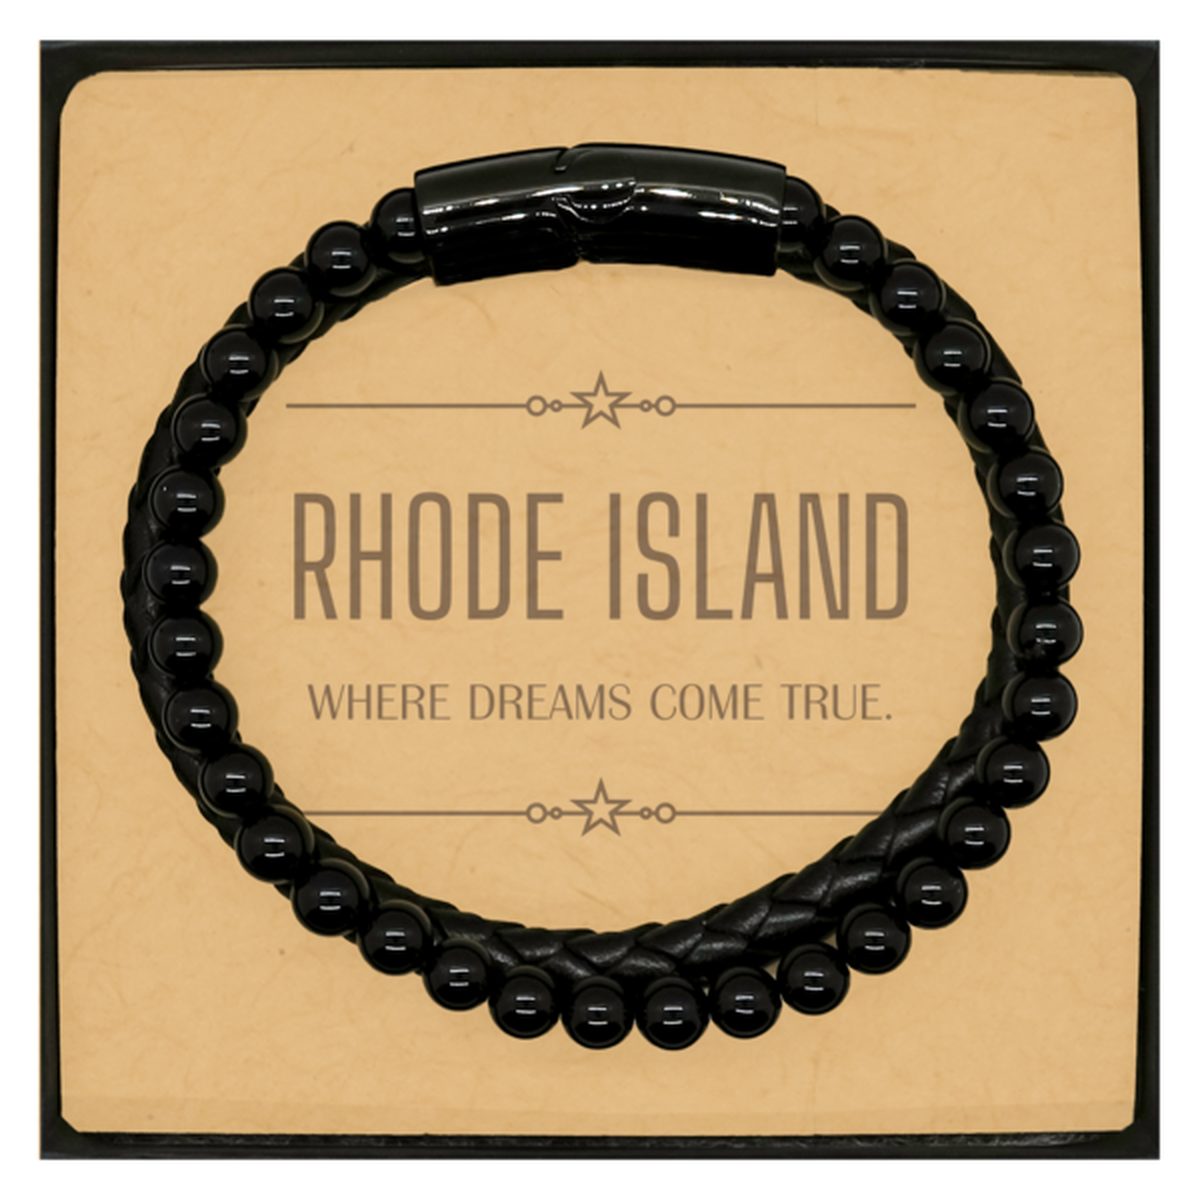 Love Rhode Island State Stone Leather Bracelets, Rhode Island Where dreams come true, Birthday Christmas Inspirational Gifts For Rhode Island Men, Women, Friends